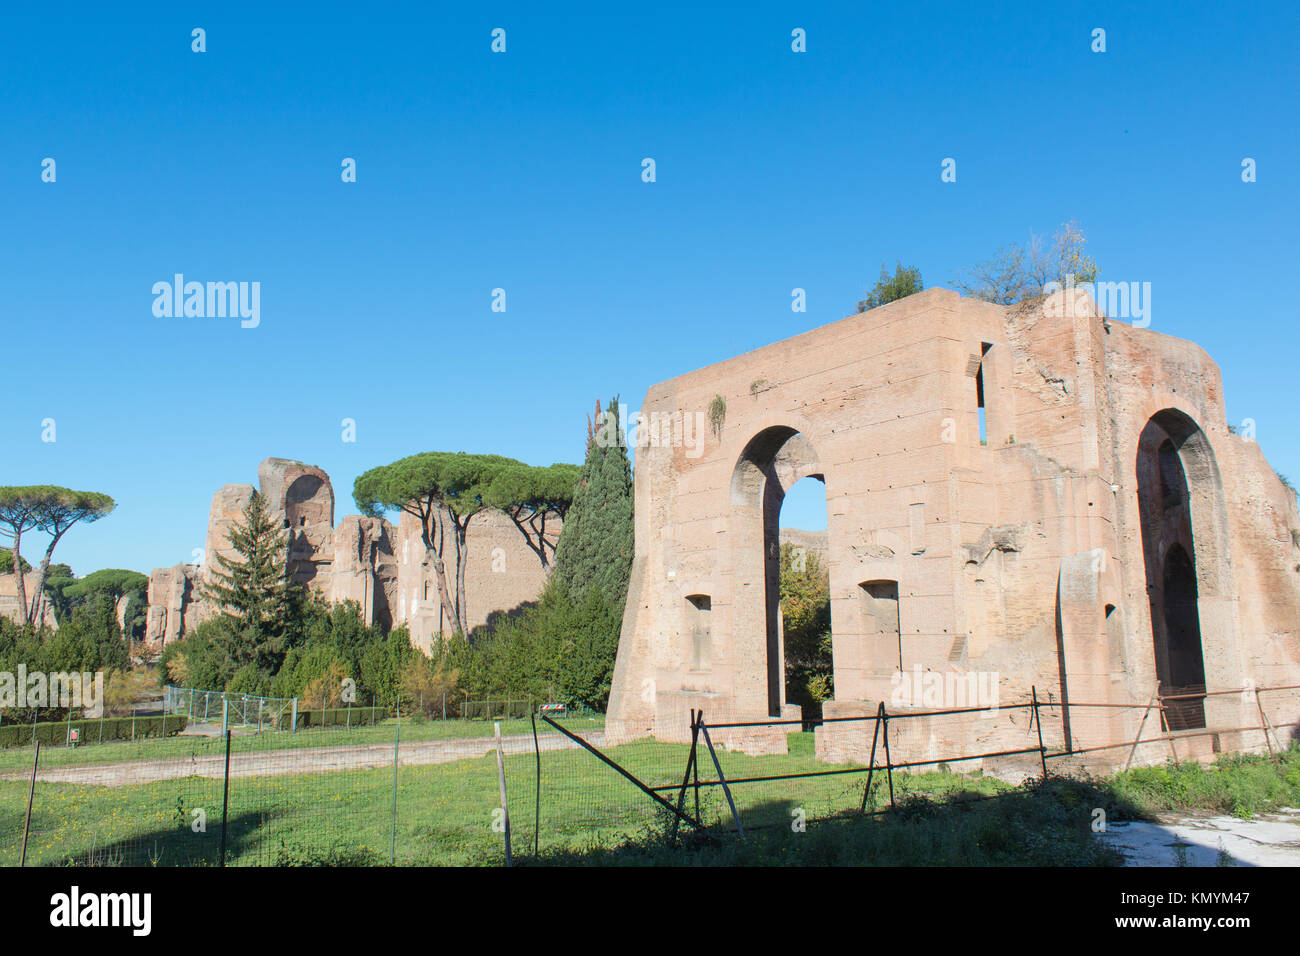 The Terme di Caracalla. Rome, Italy. Stock Photo